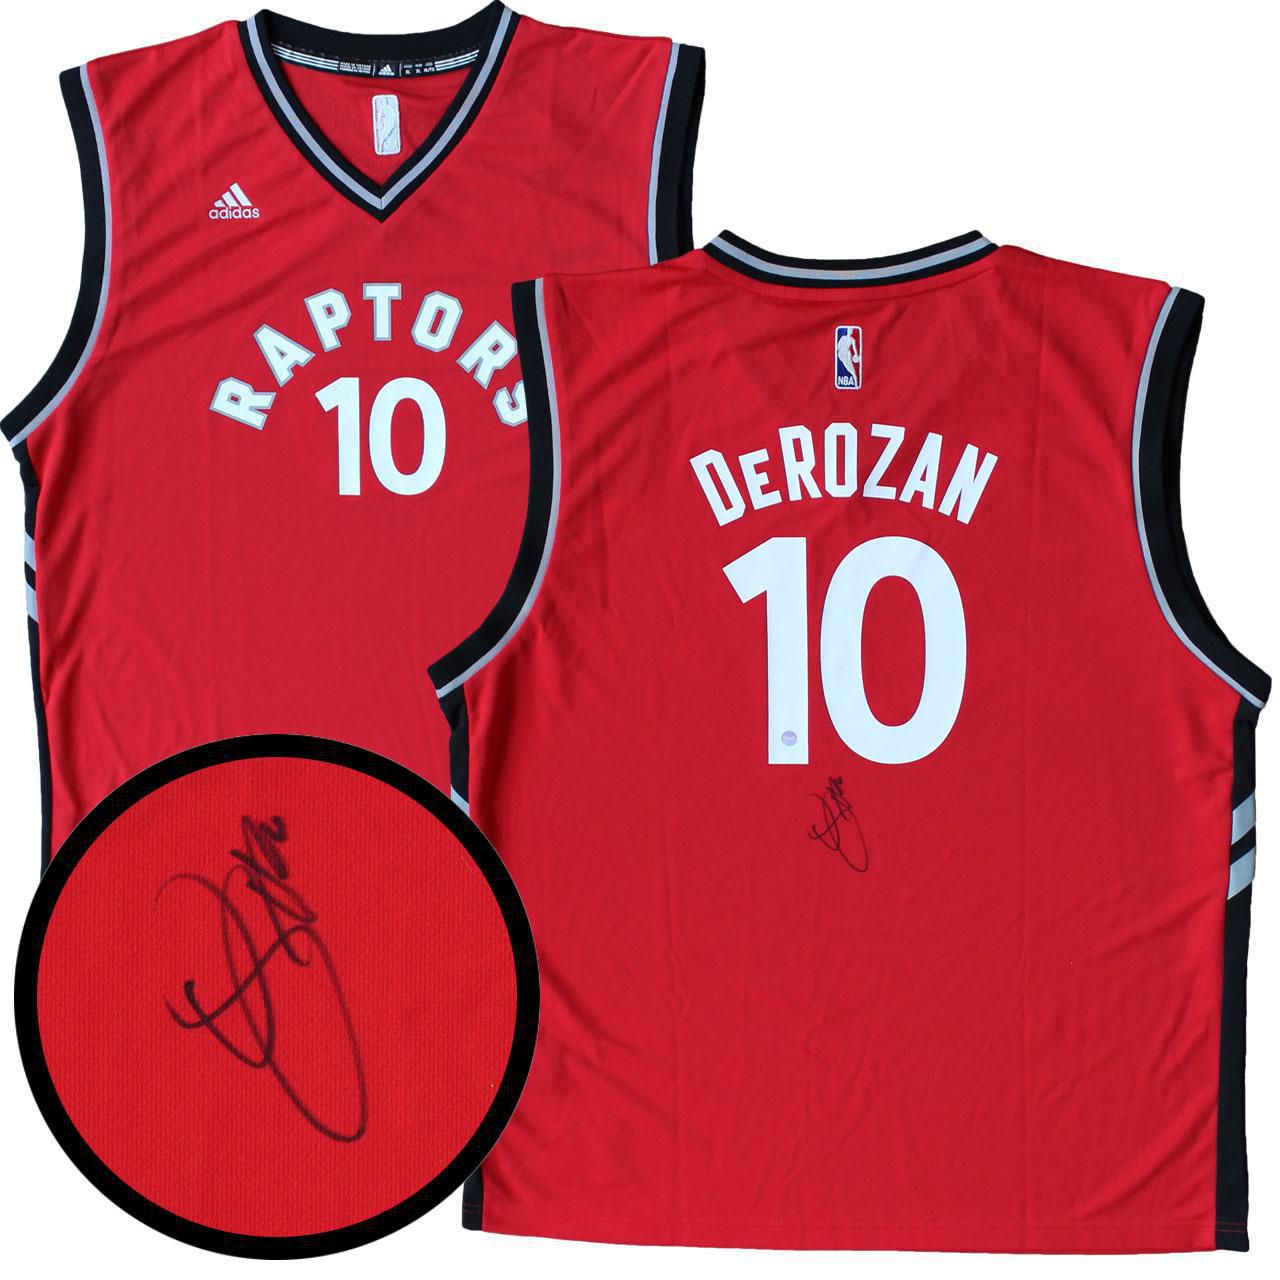 DeMar DeRozan Signed Jersey Toronto 